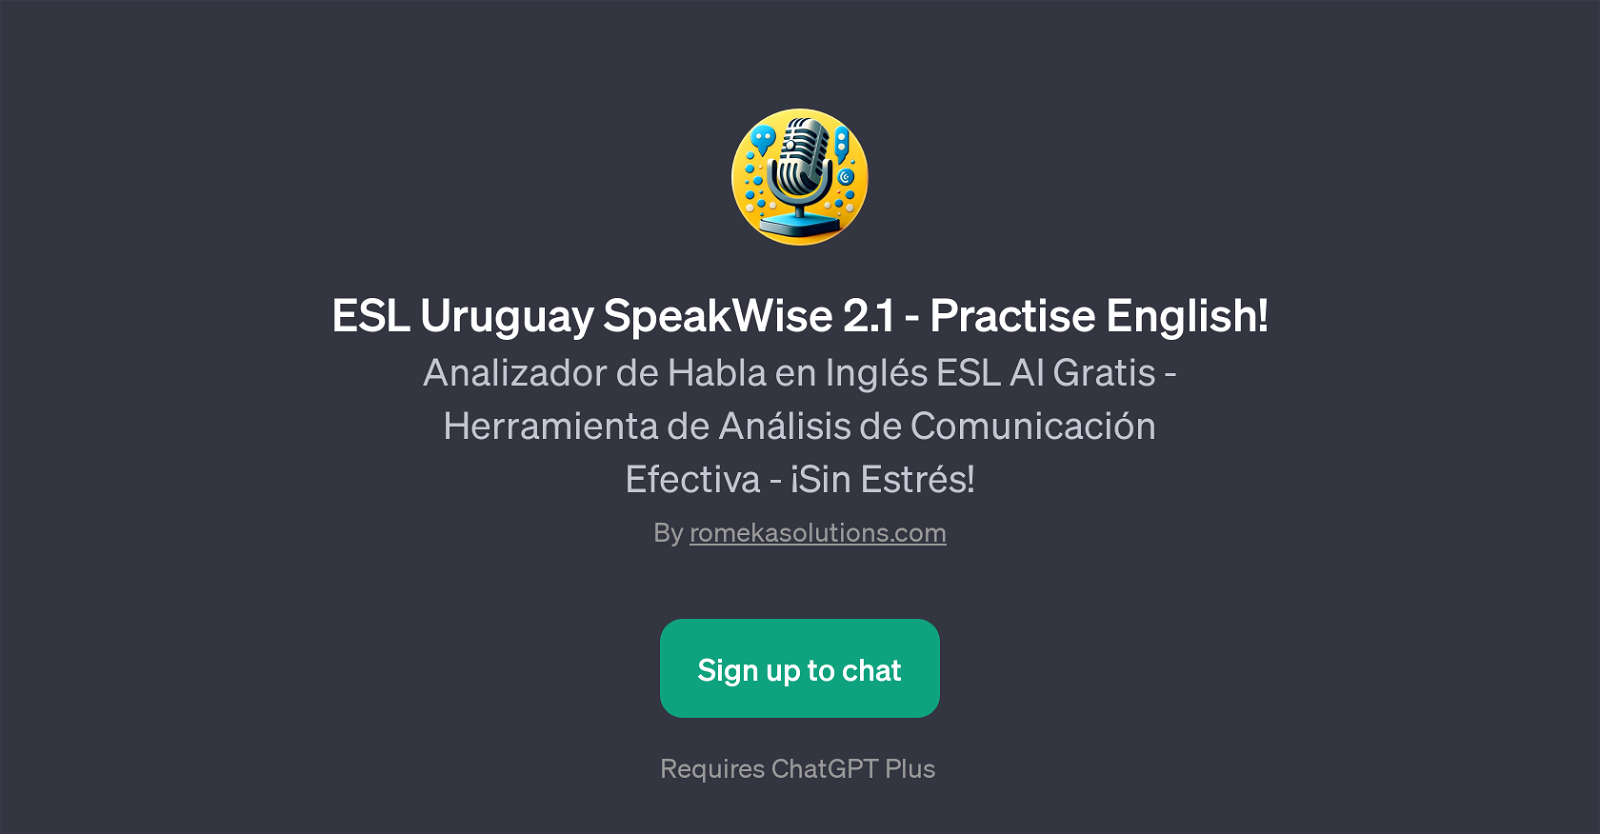 ESL Uruguay SpeakWise 2.1 website